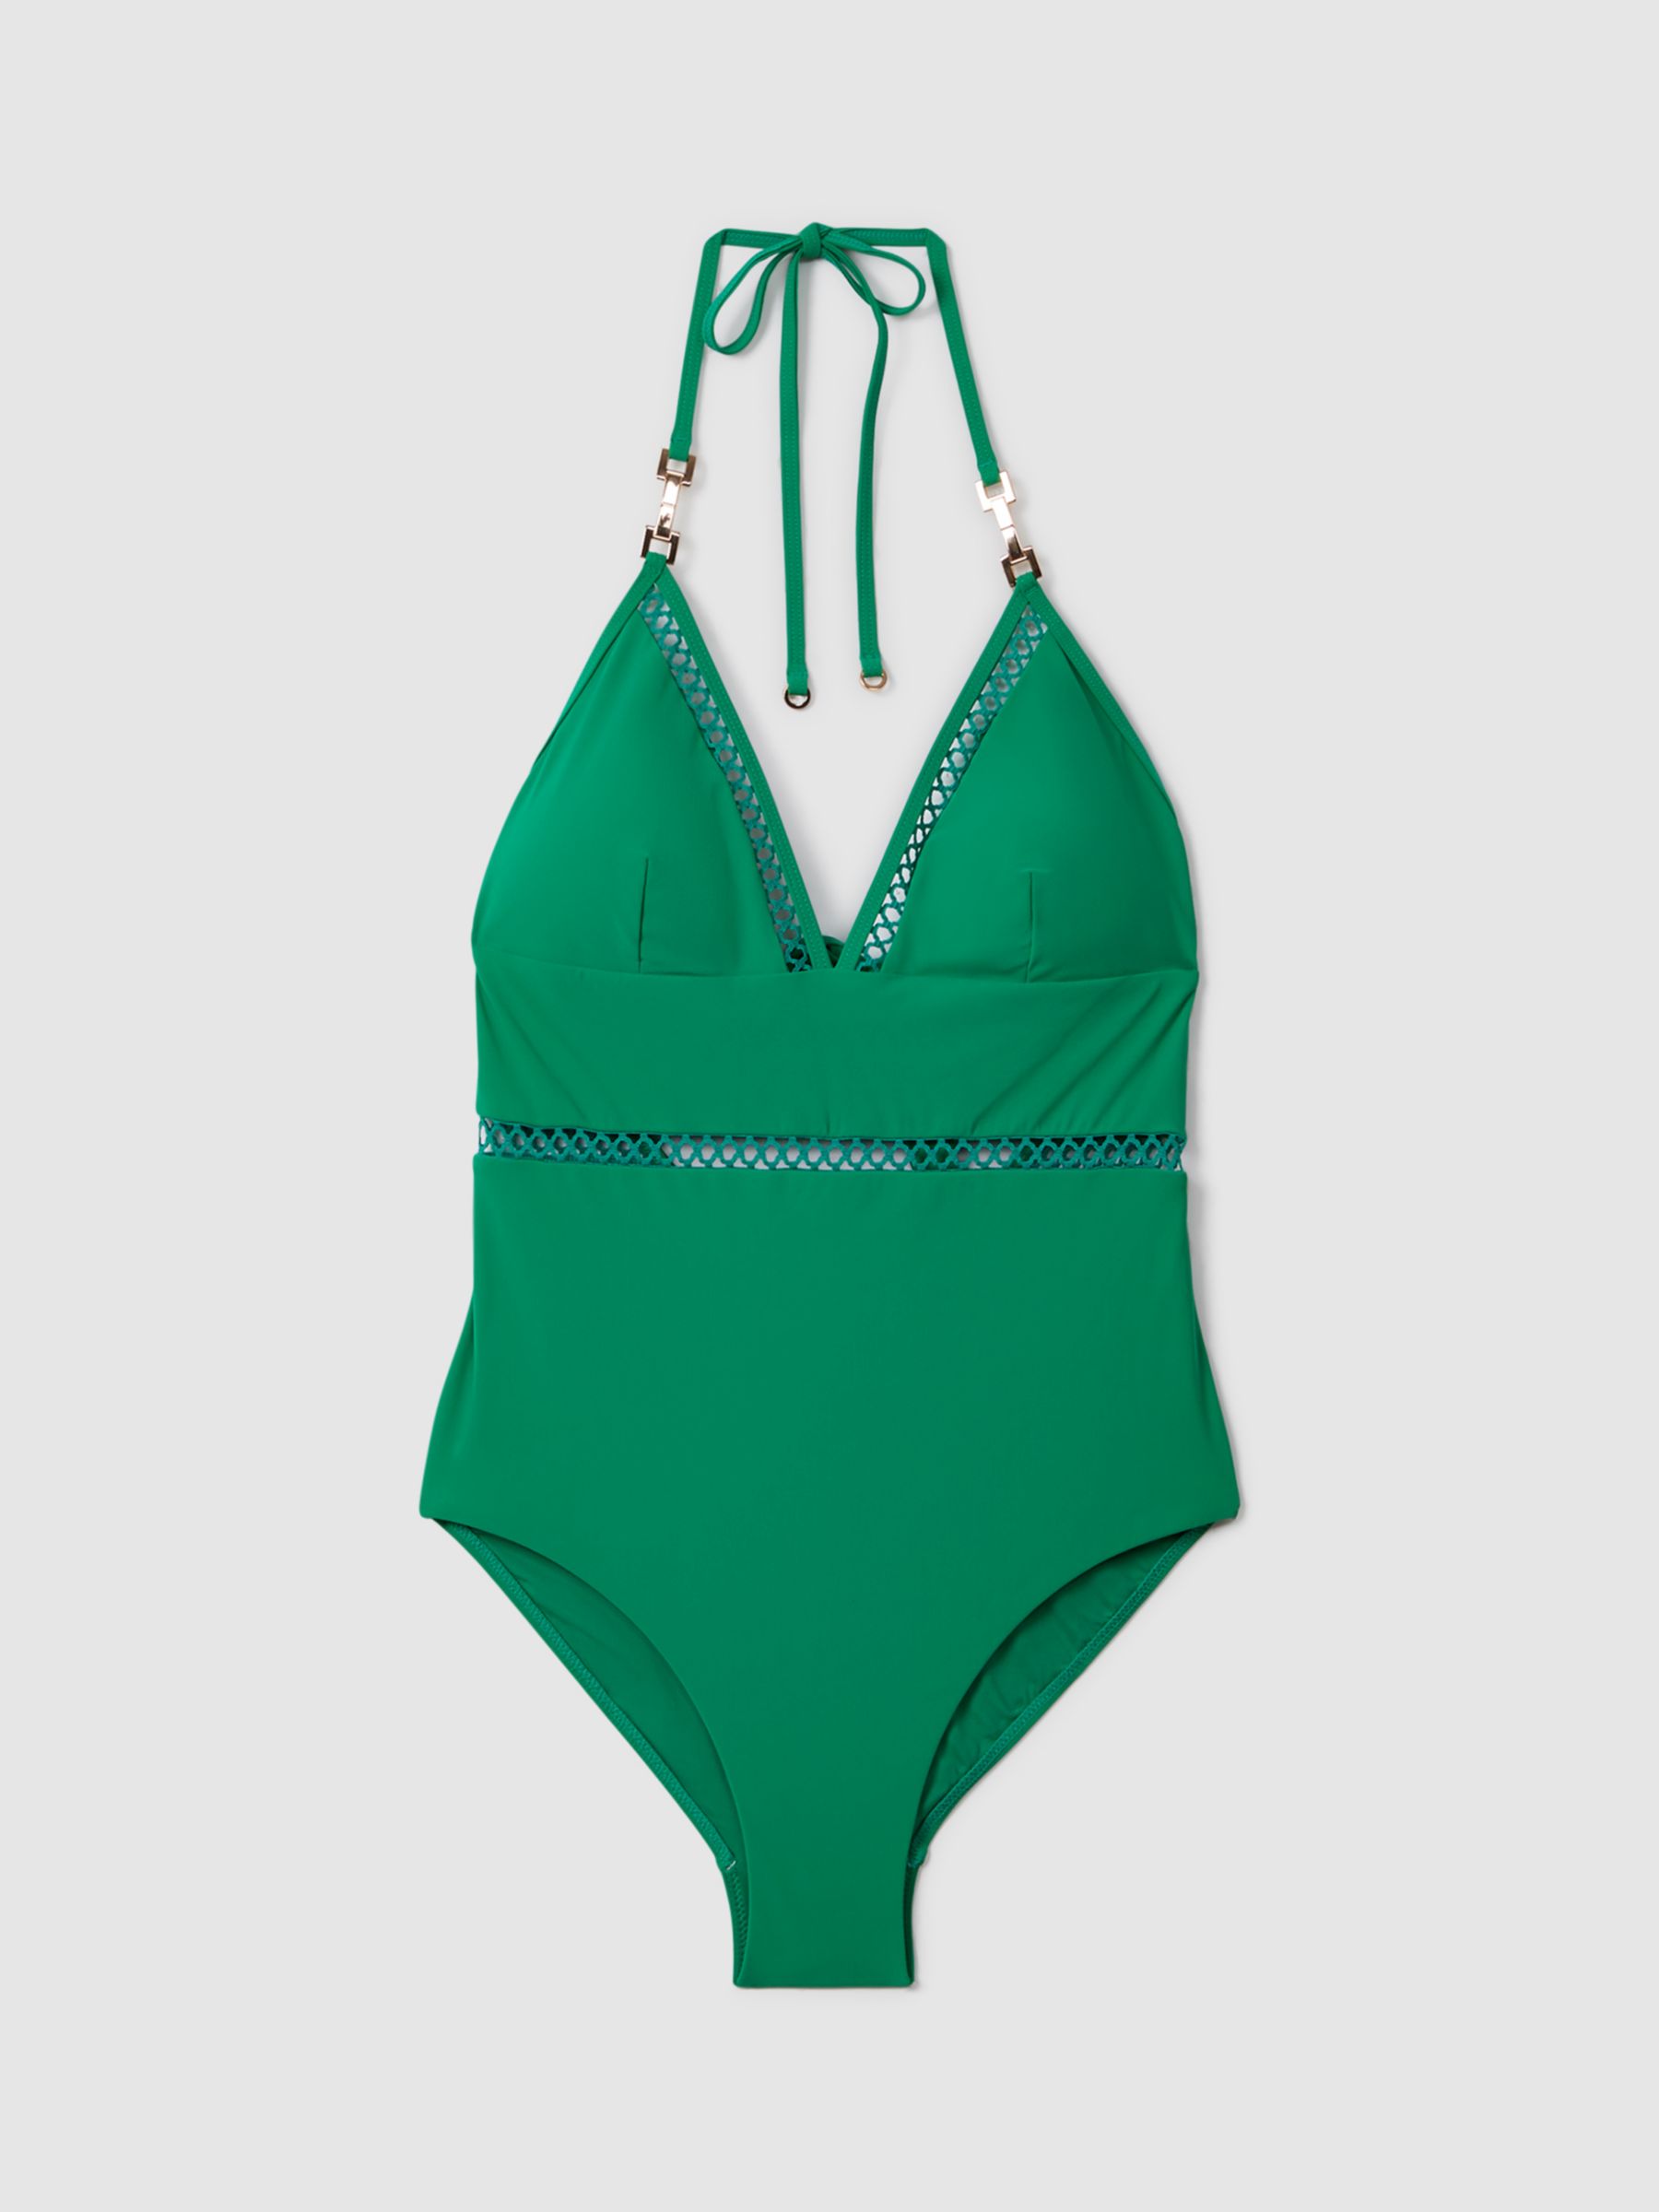 Reiss Rita Latice Detail Halterneck Swimsuit, Green, 6